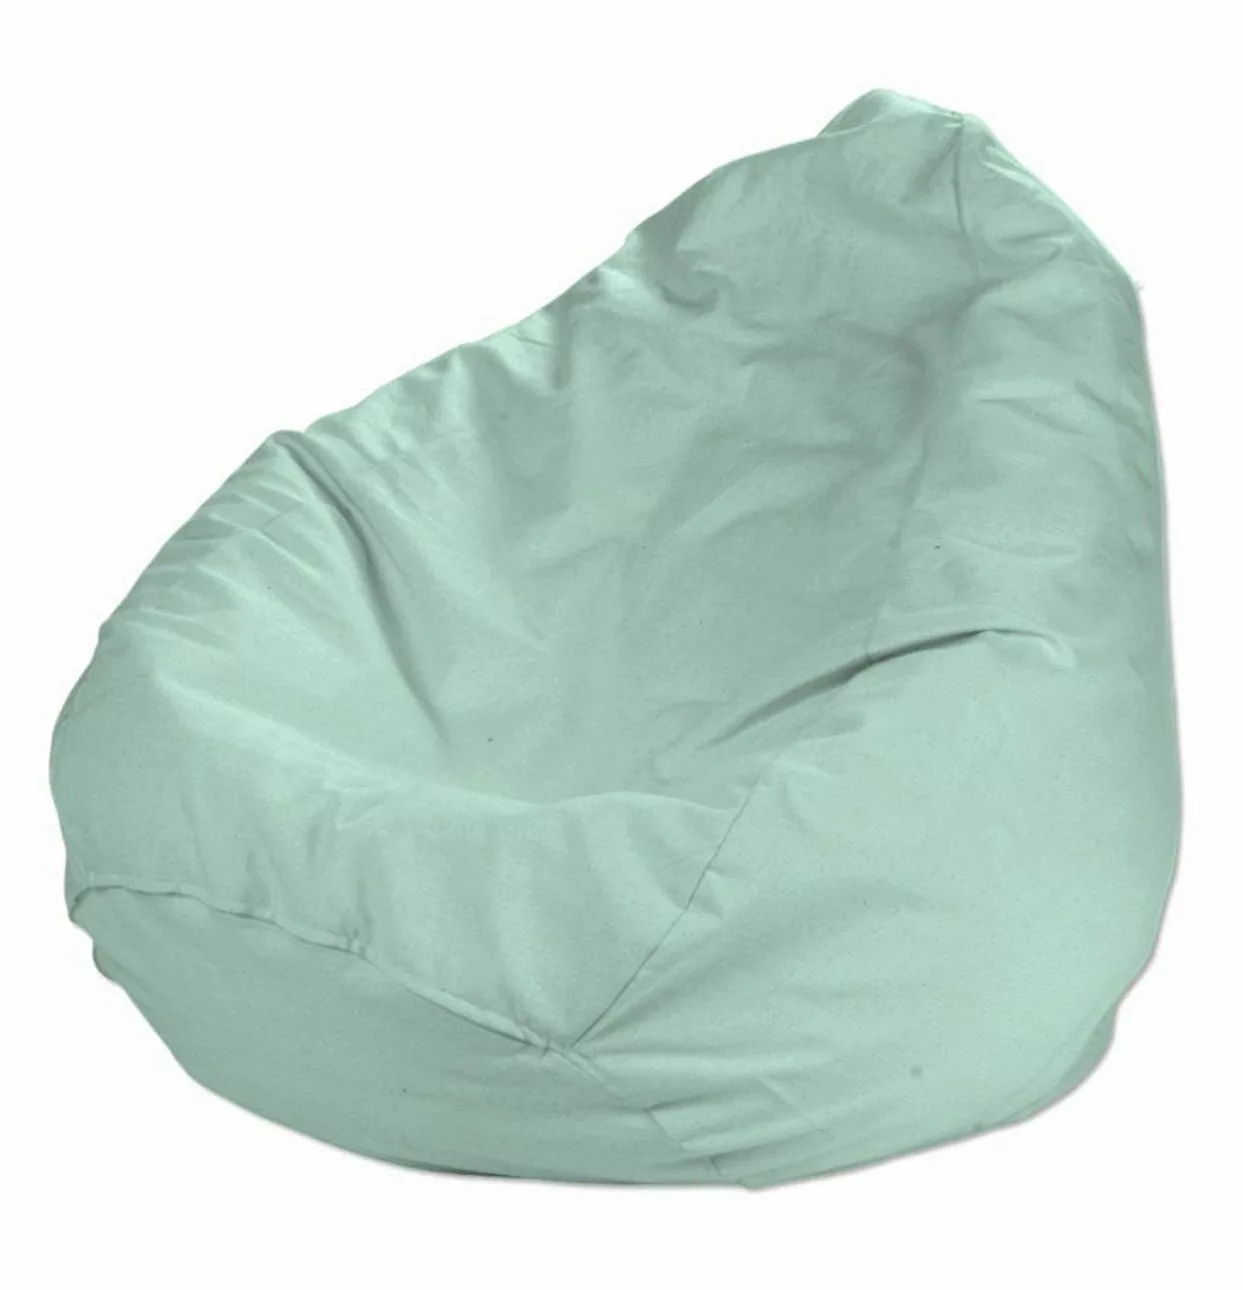 Bezug für Sitzsack, mintgrün, Bezug für Sitzsack Ø50 x 85 cm, Loneta (133-3 günstig online kaufen